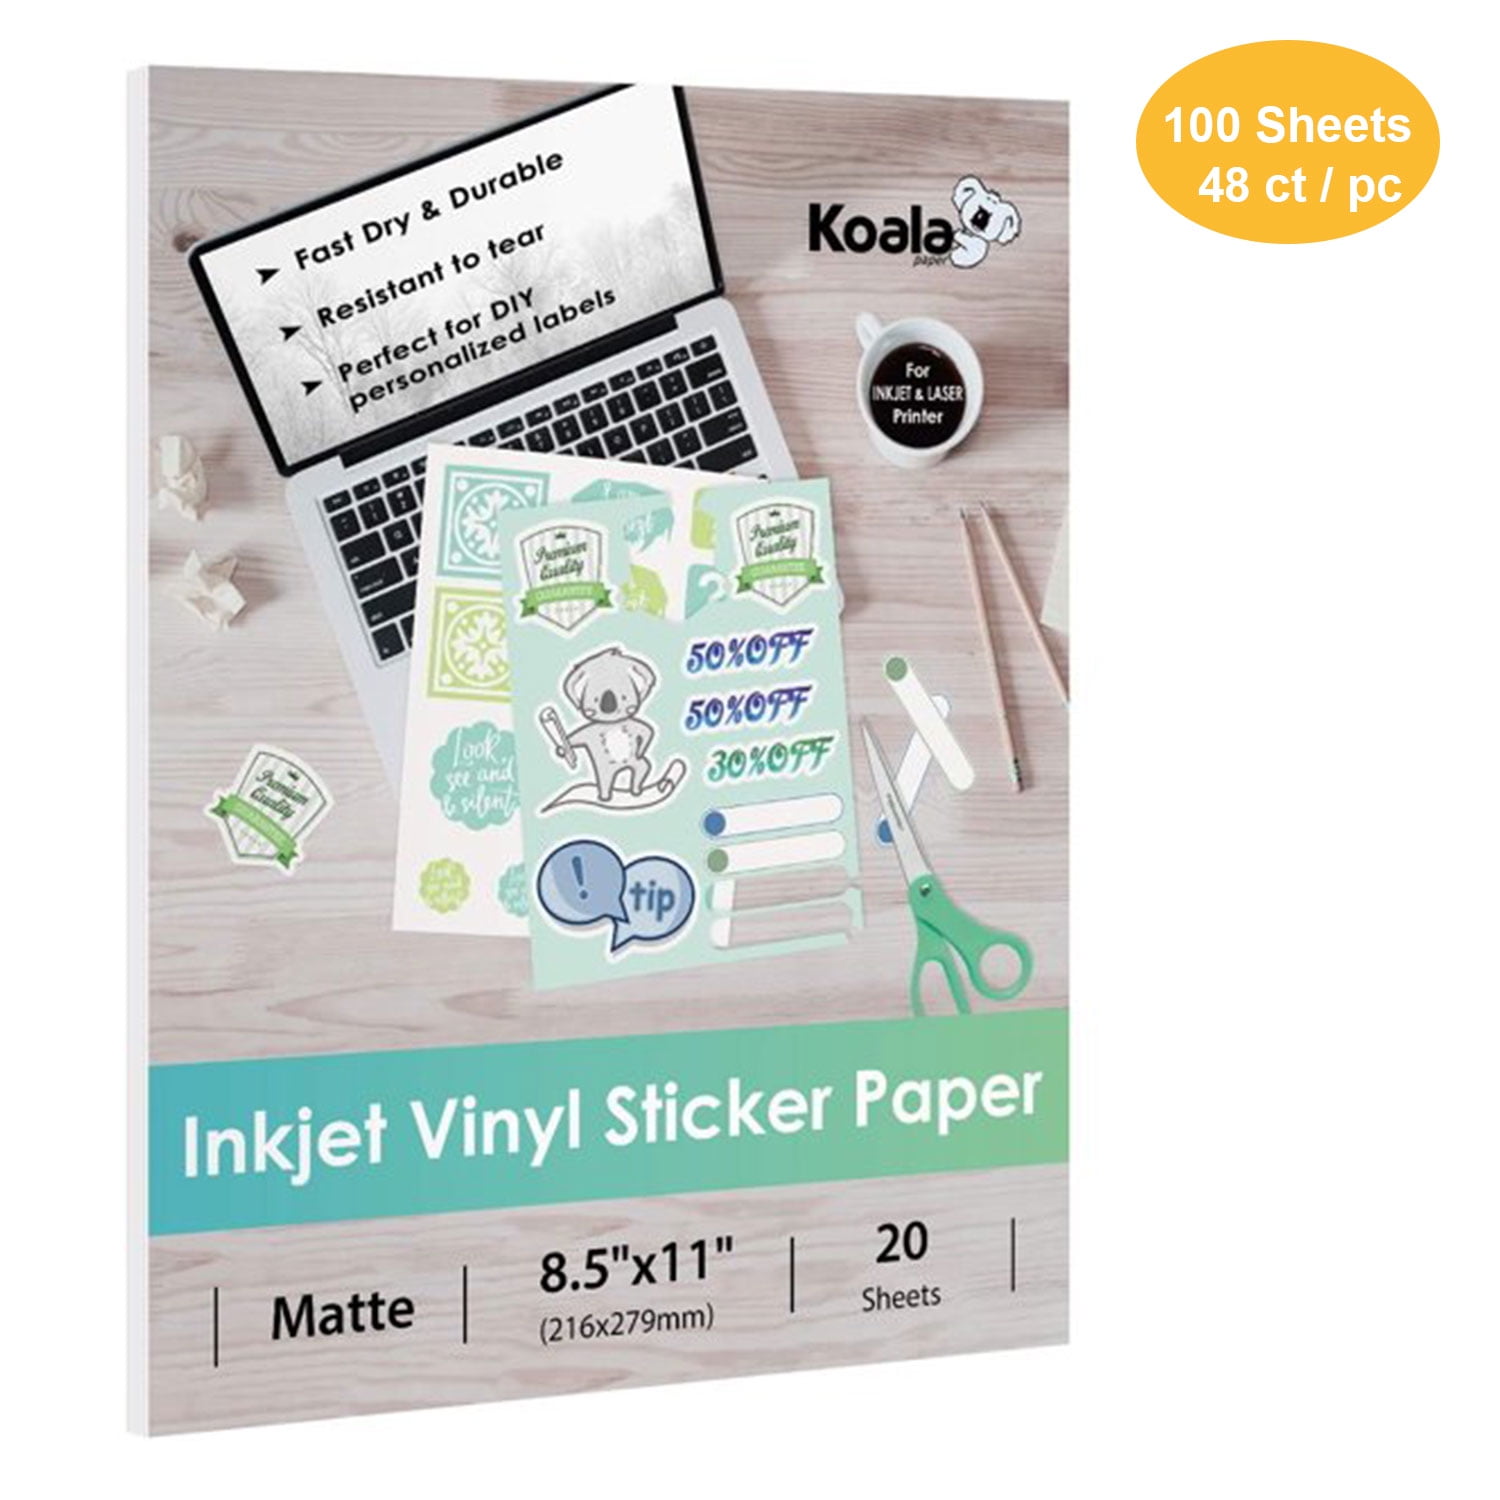 Koala Printable Vinyl Sticker Paper for Inkjet Printer - Frosty Clear  Sticker Paper - 20 Sheets Waterproof Sticker Printer Paper - Tear and  Scratch